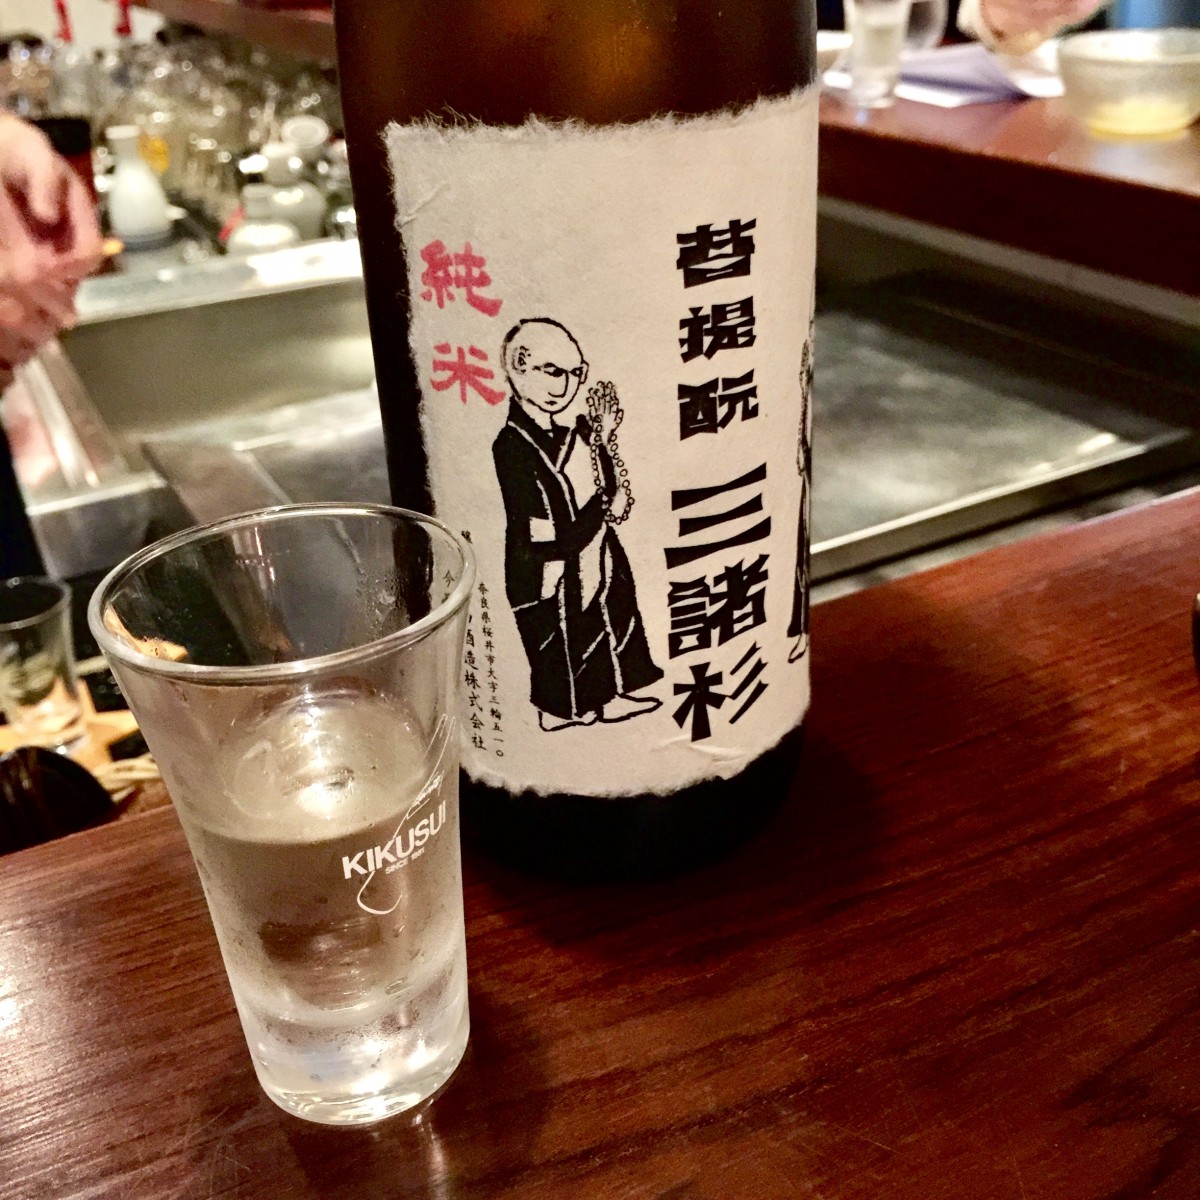 Shukuu Izakaya sake